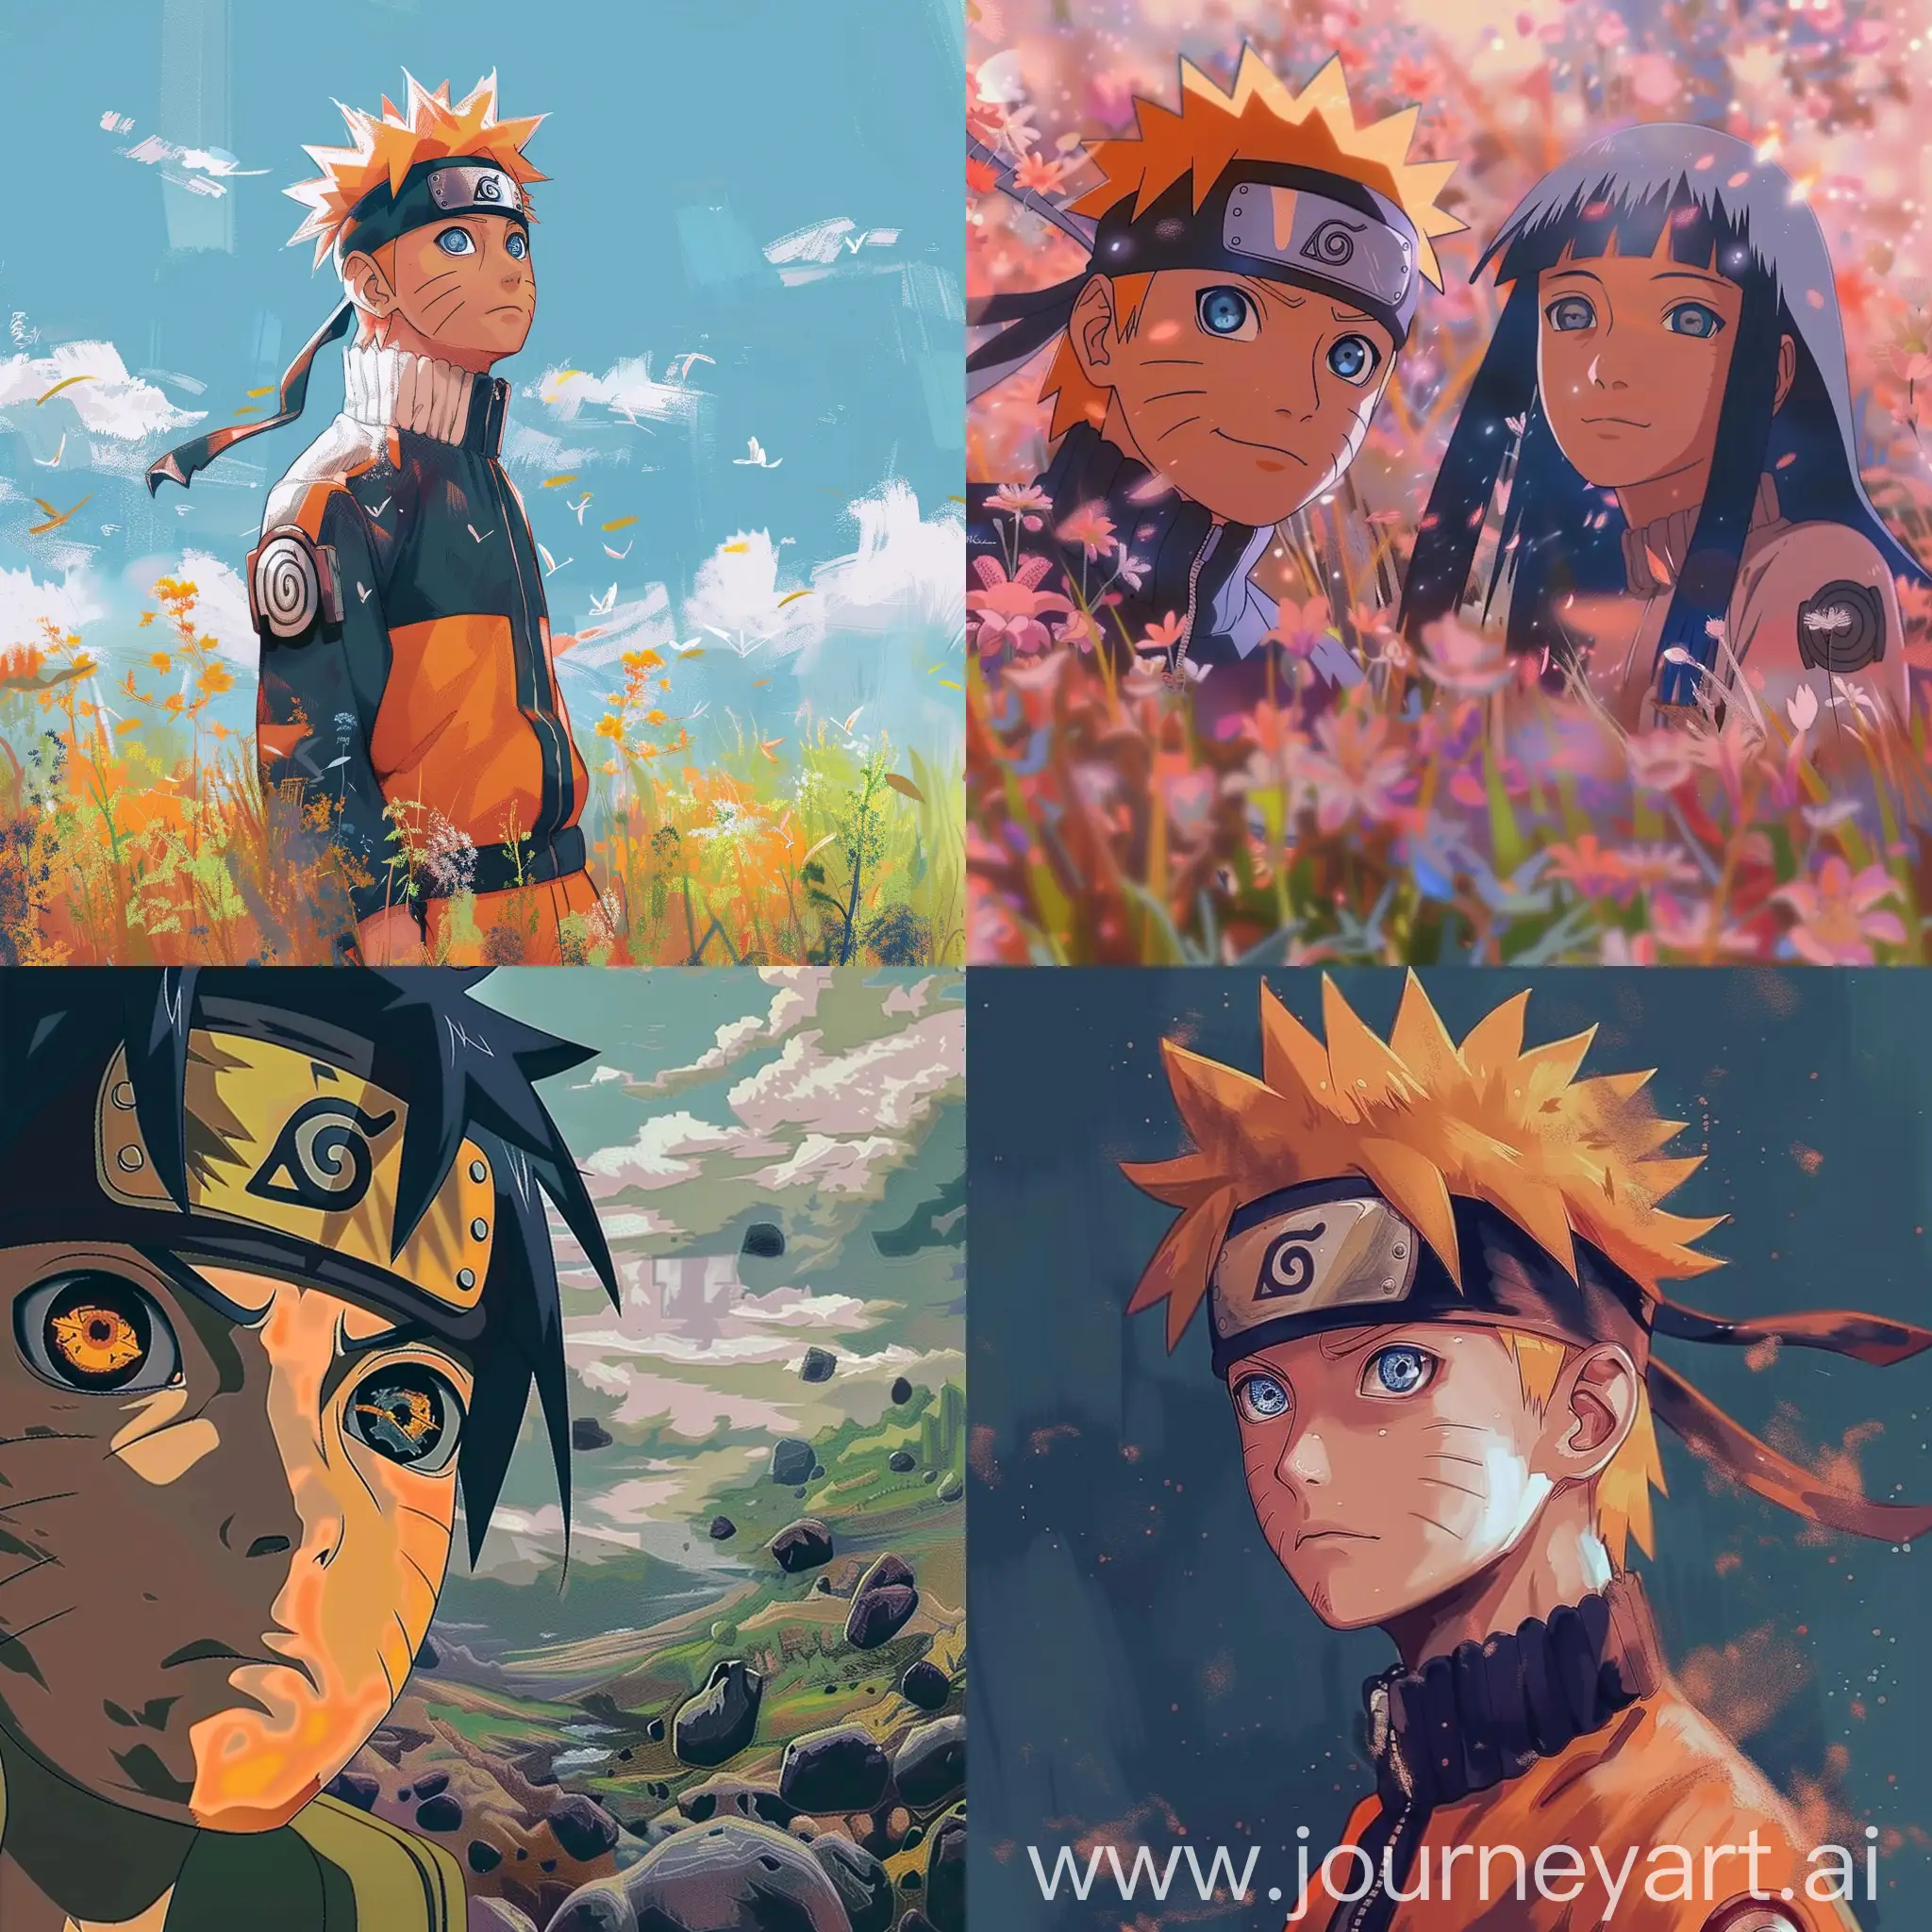 Naruto-Anime-Characters-in-GhibliInspired-Art-Style